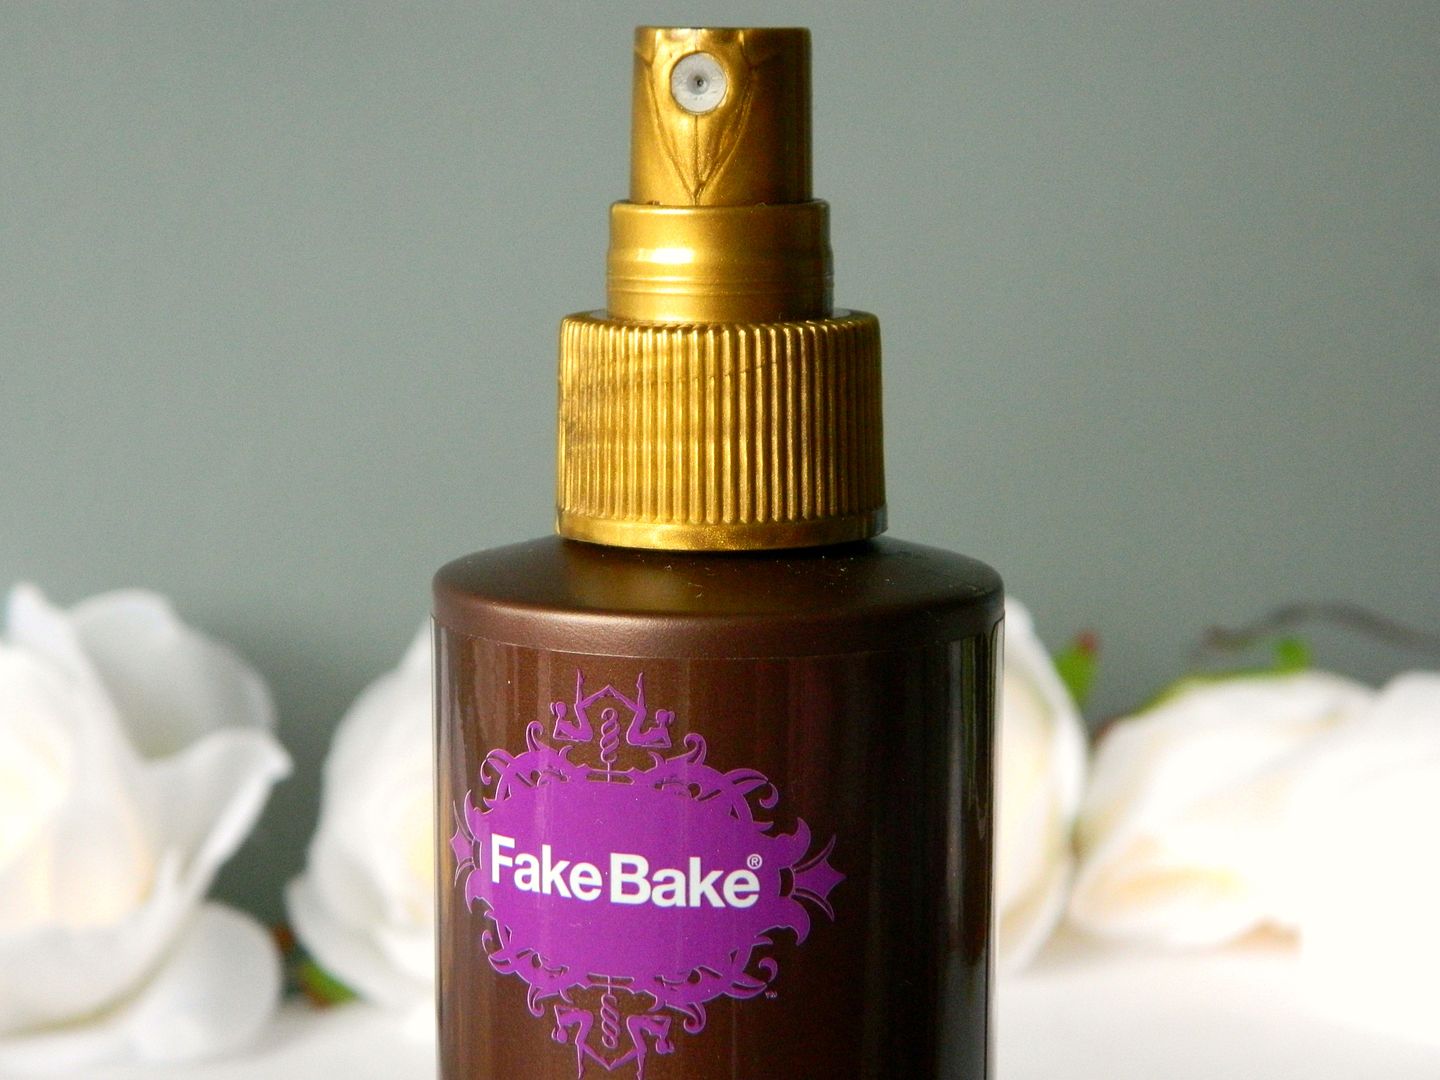 Fake Bake Flawless Self Tan Liquid Bottle Spray Nozzle Review Belle-amie